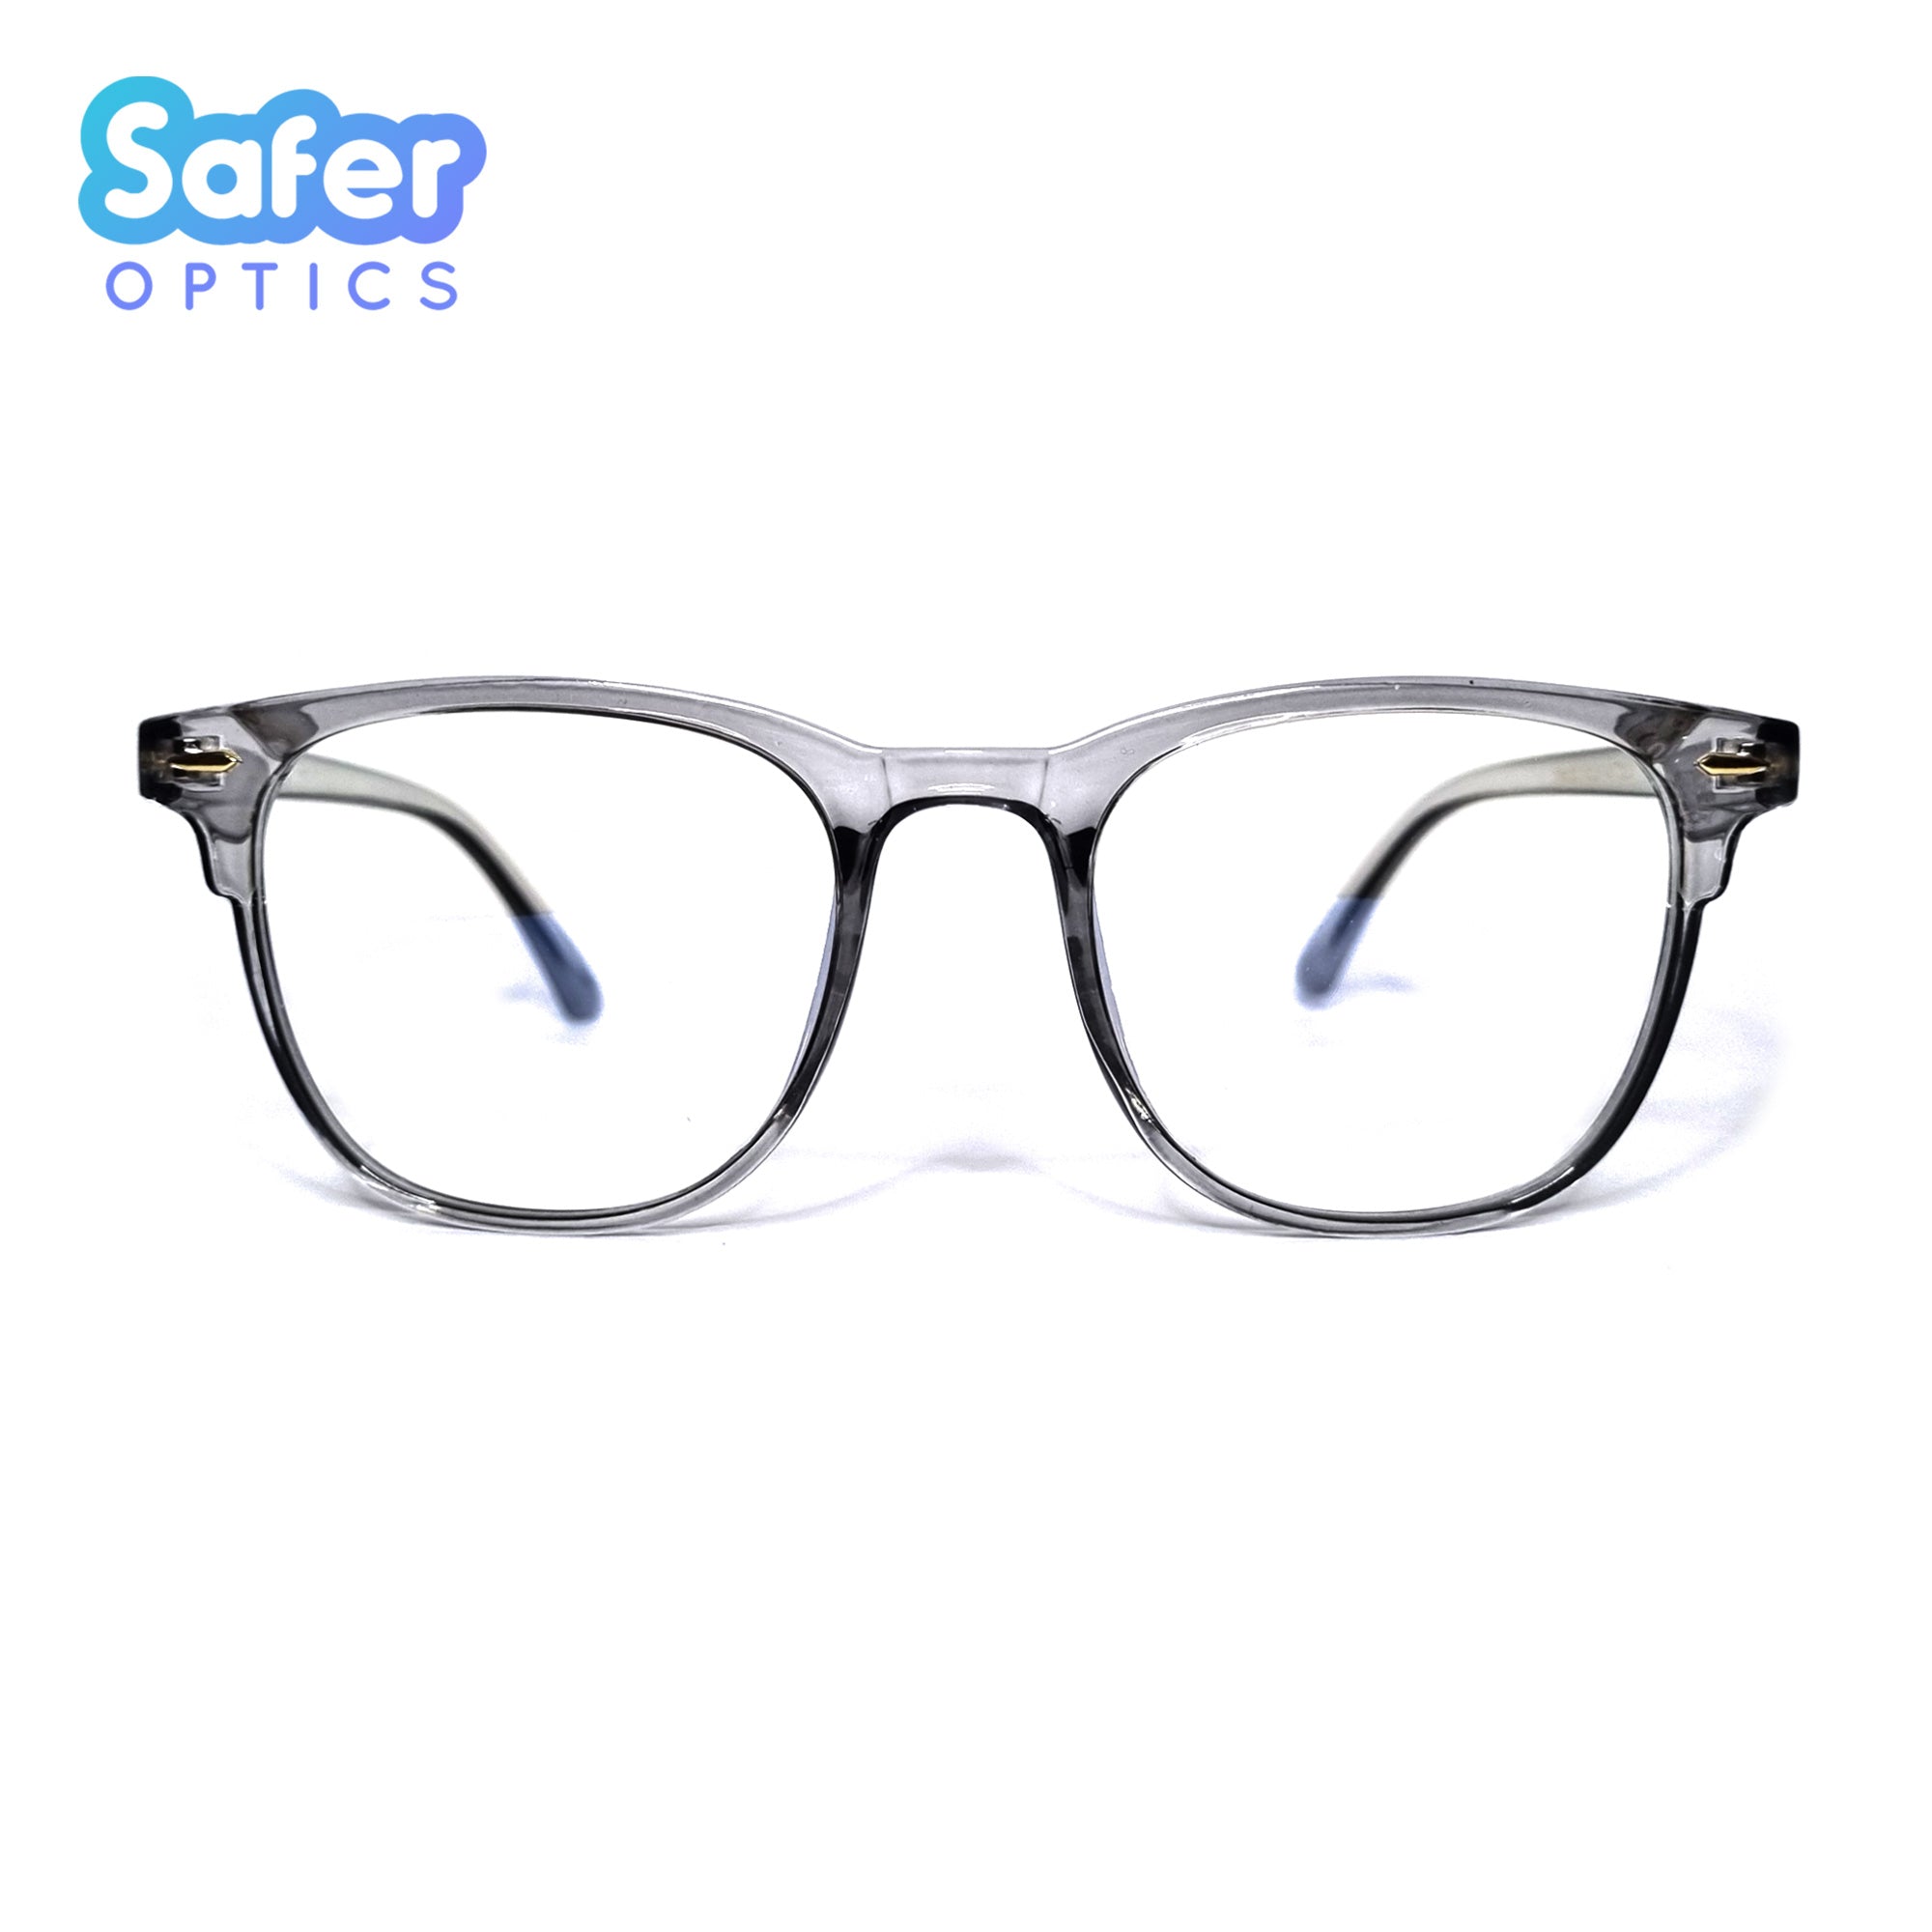 Pacific - Ice Grey - SaferOptics Anti Blue Light Glasses Malaysia | Adult, Black, Customize, Large, Lightweight, new, Pacific, Square, White